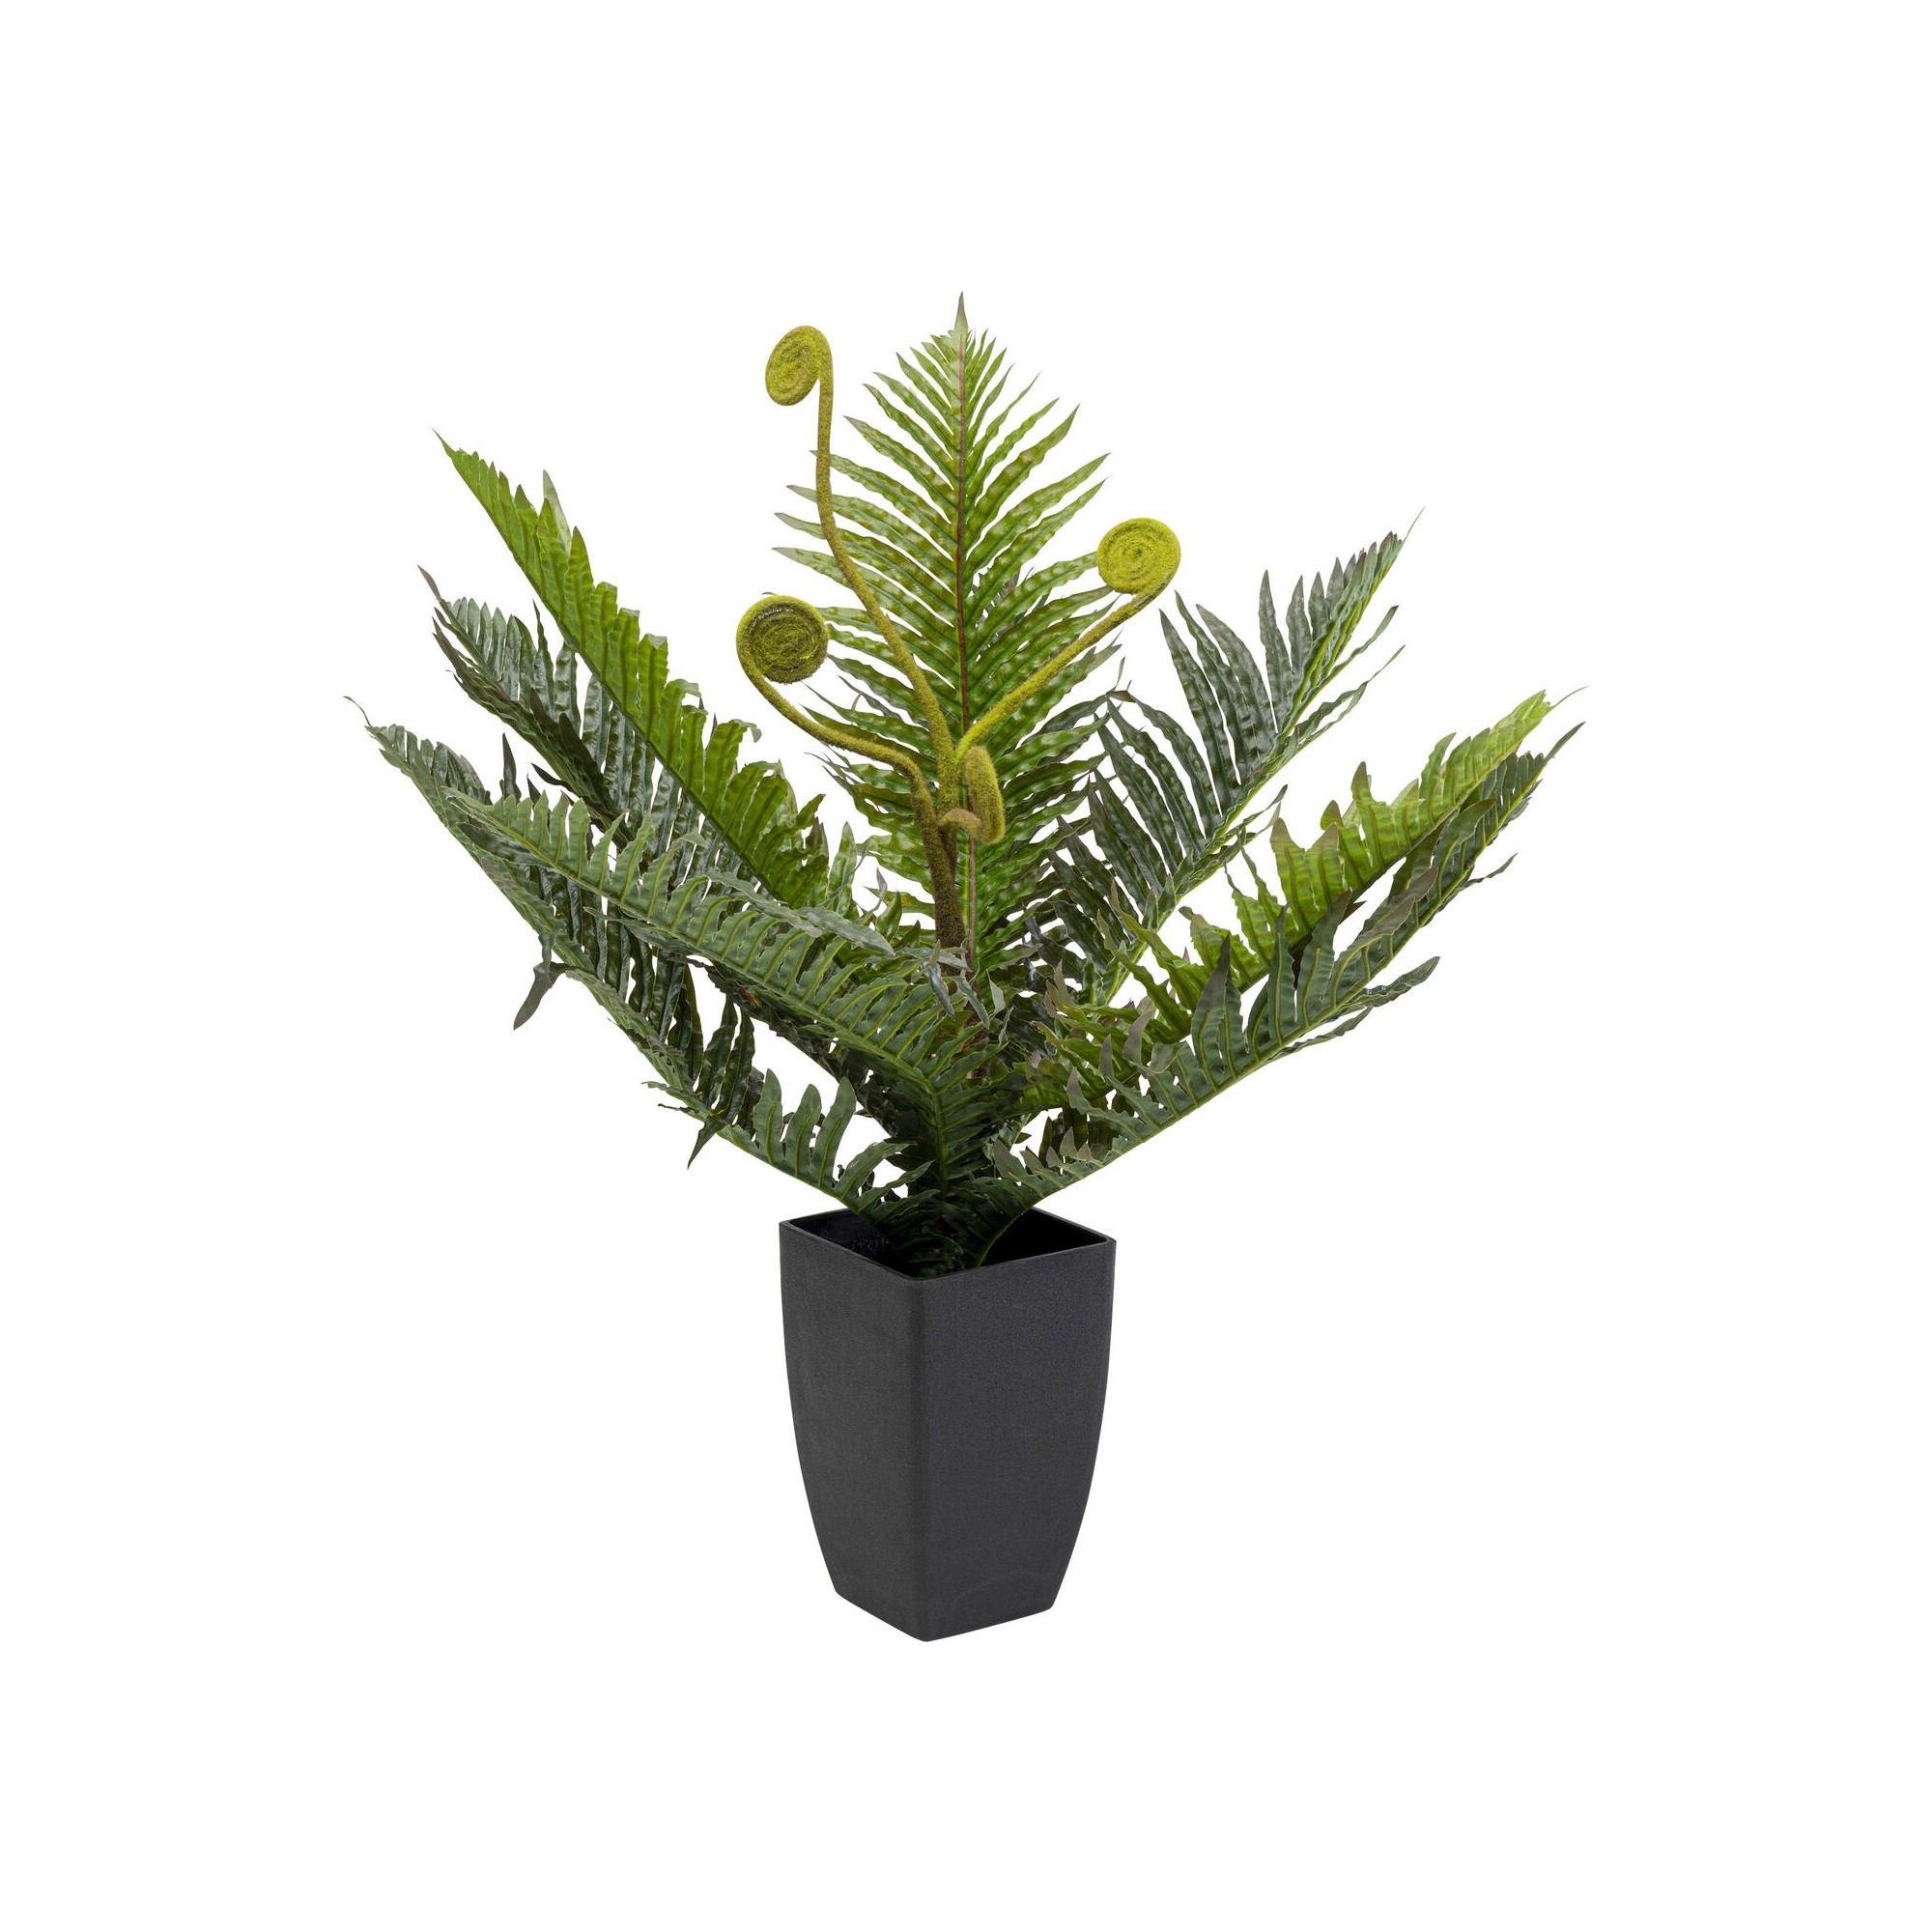 Plante décorative Farn 55cm